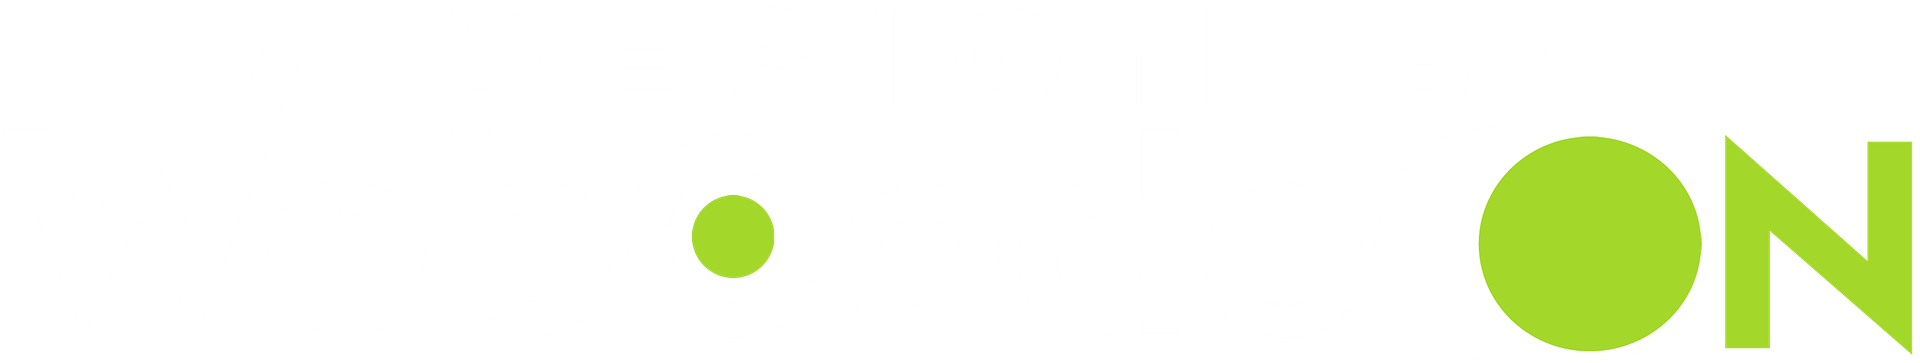 WebCodeON Design Logo